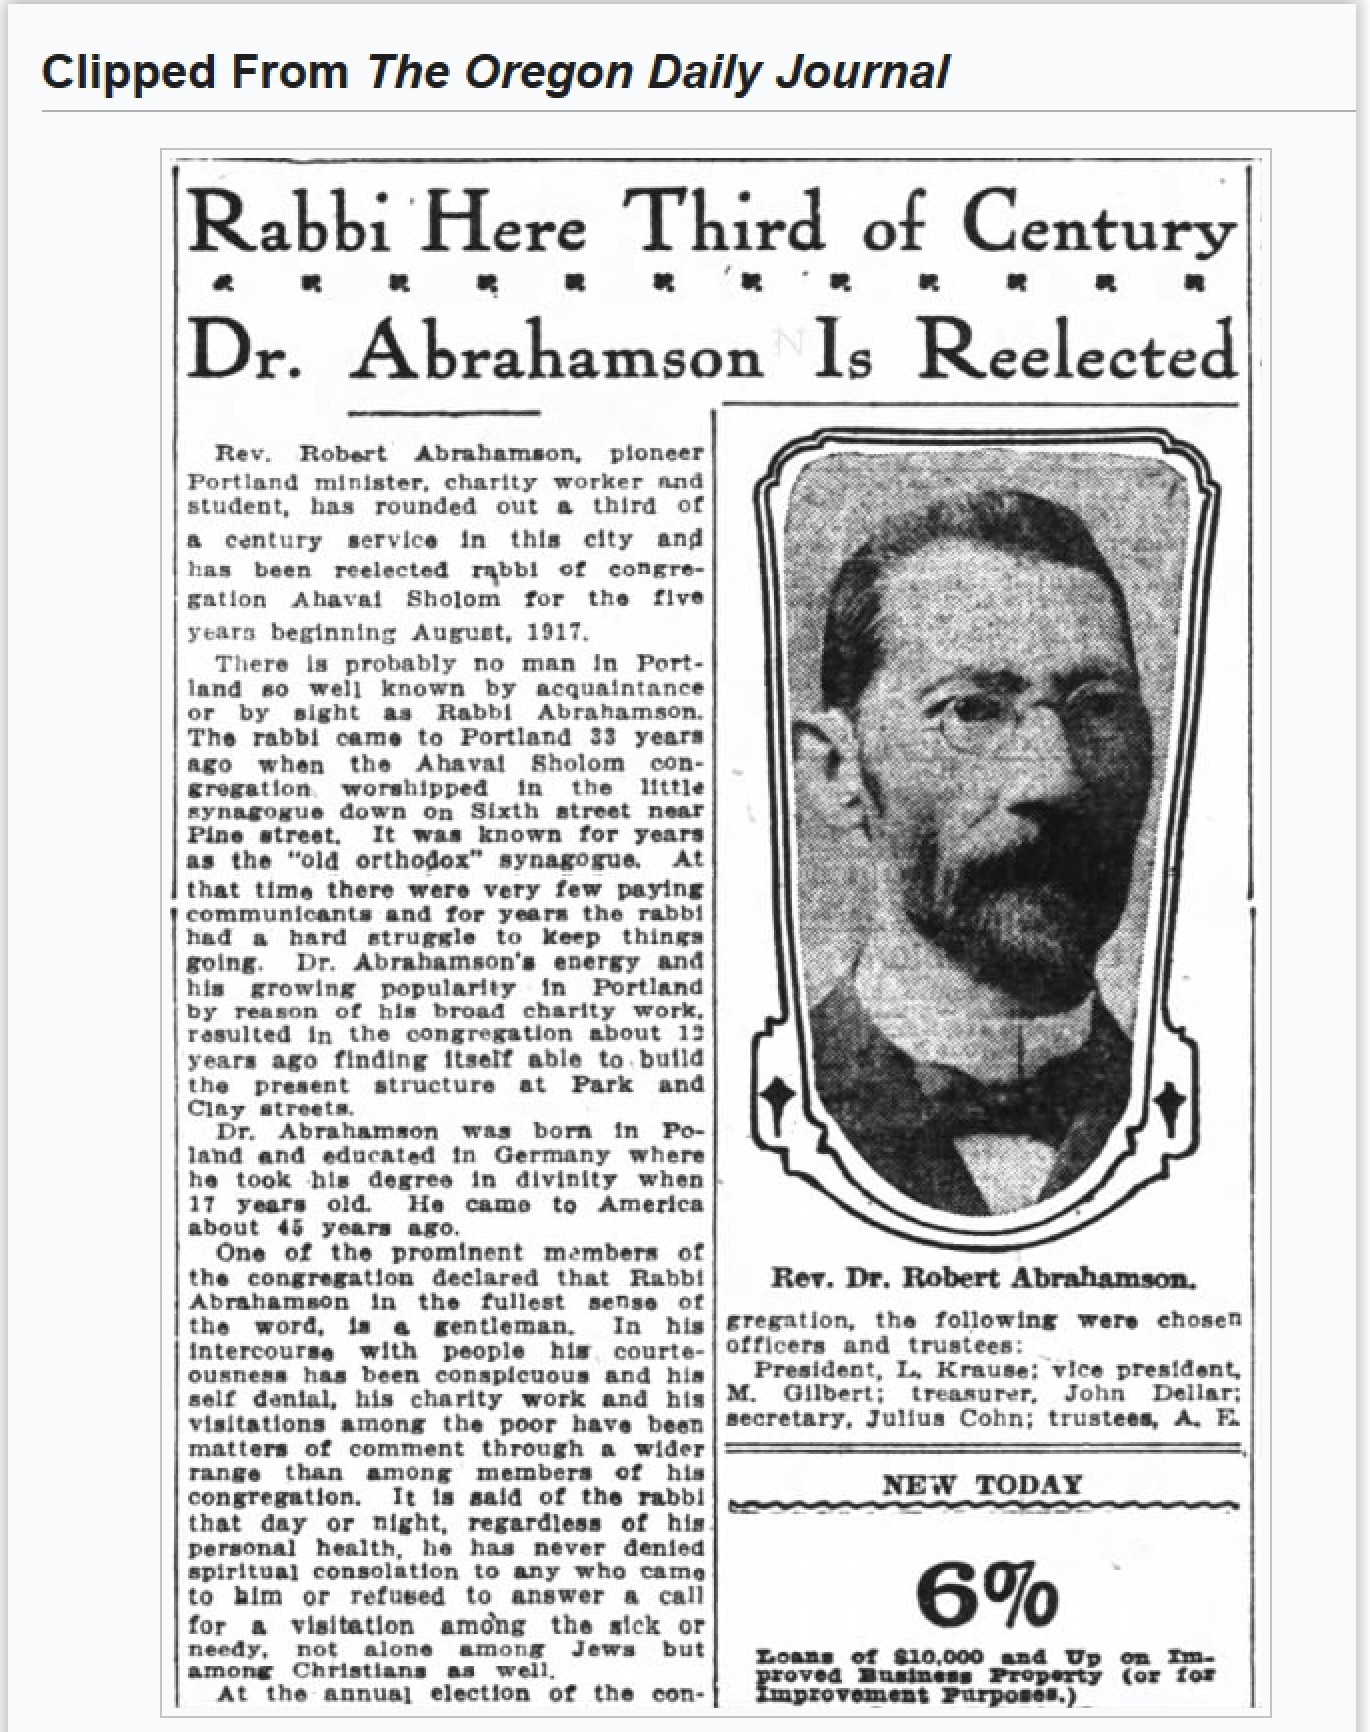 Rabbi Abrahamson